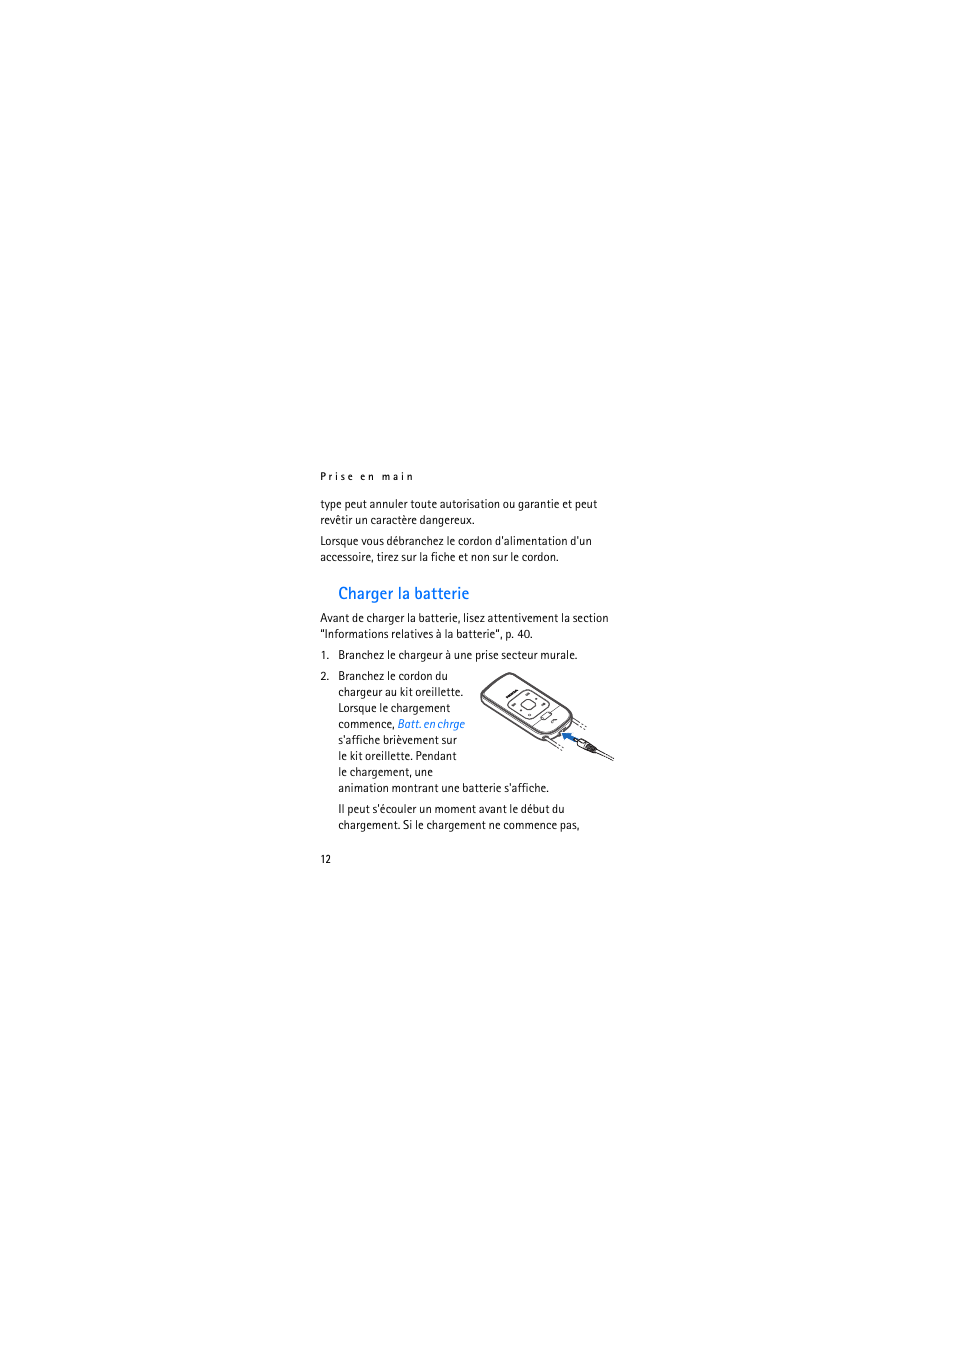 Charger la batterie | Nokia Bluetooth Stereo Headset BH-903 Manuel d'utilisation | Page 12 / 45